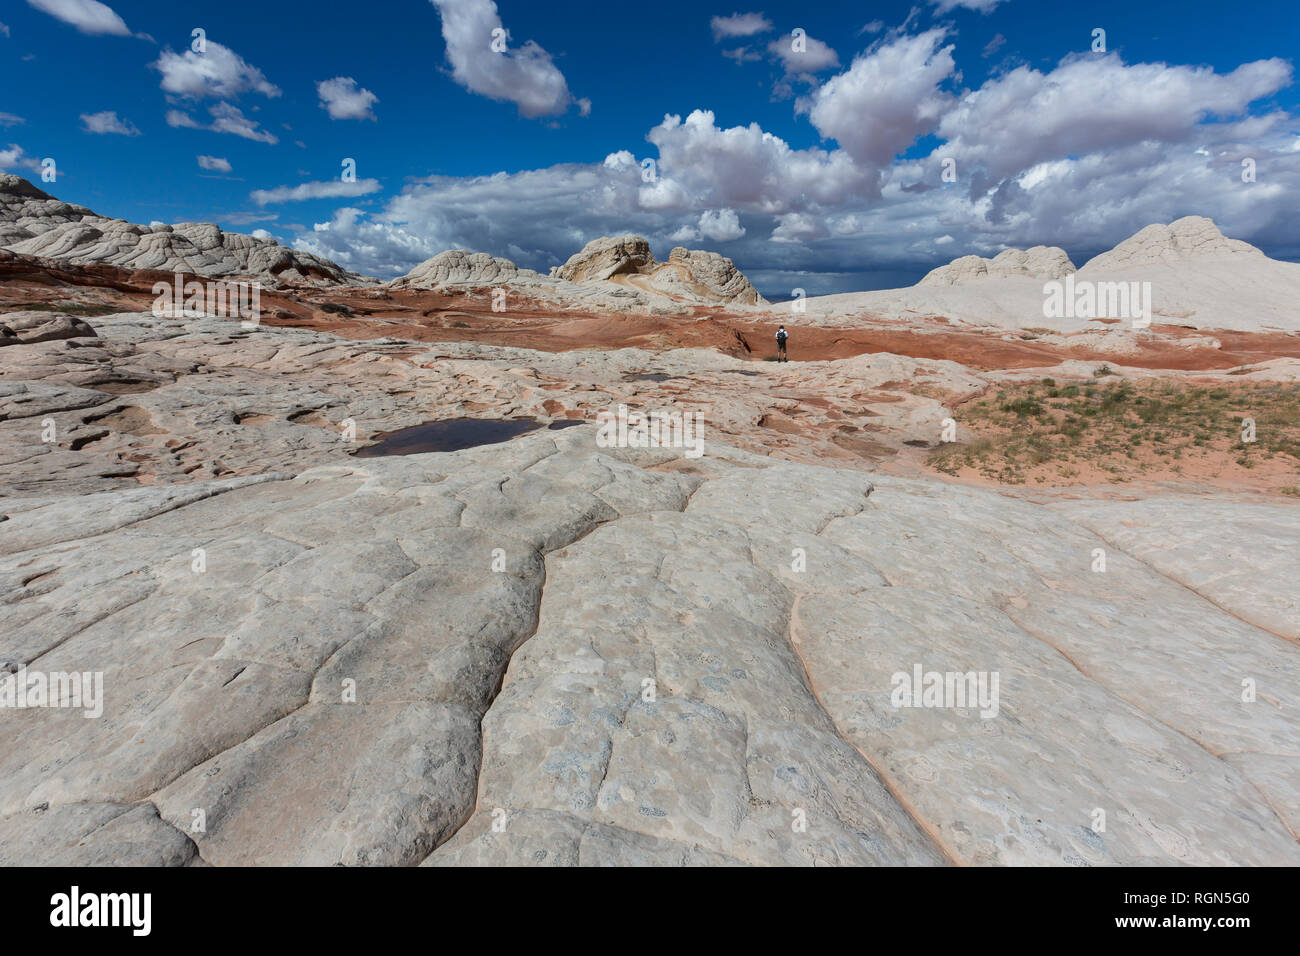 USA, Arizona, Paria Plateau, White Pocket, one person hiking Stock Photo